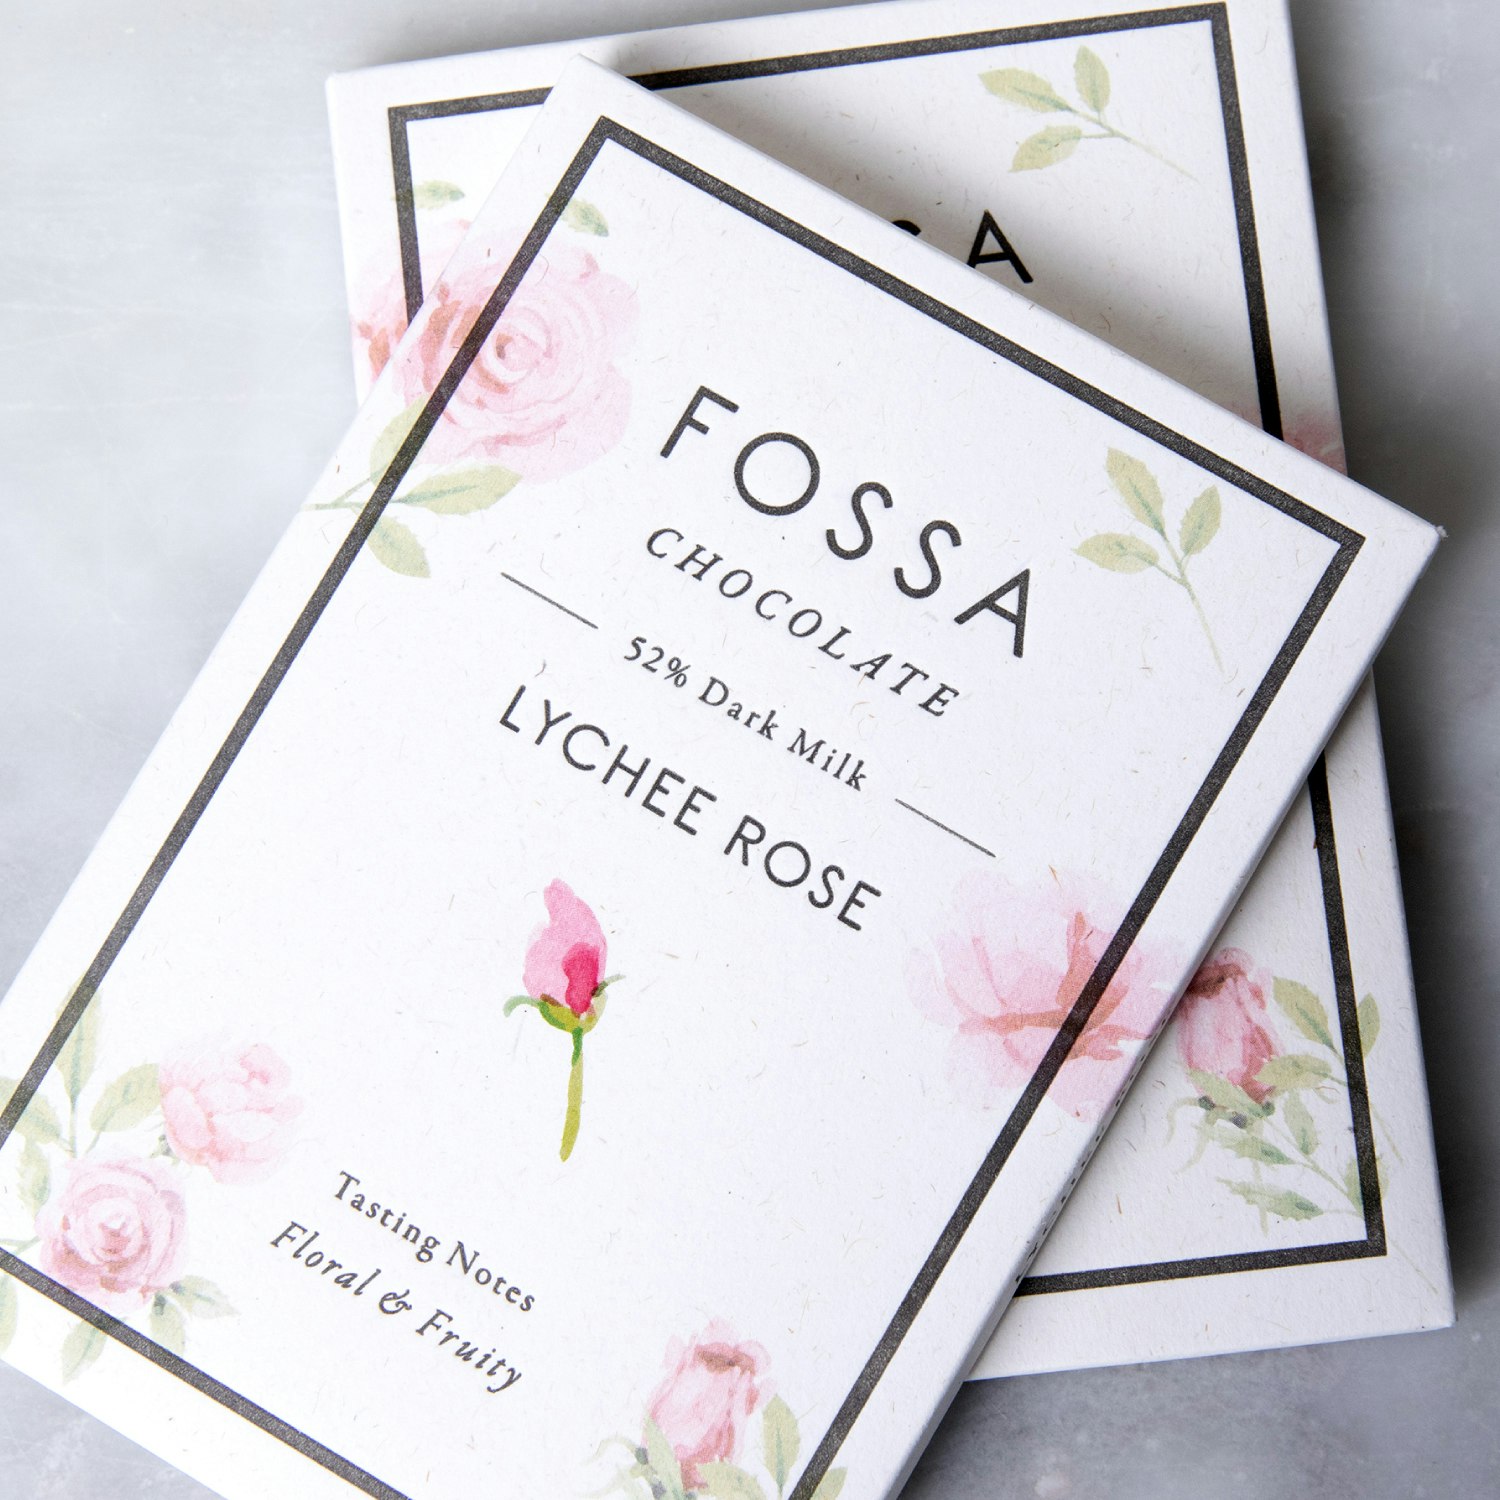 fossa lychee rose dark milk 50g specialty foods